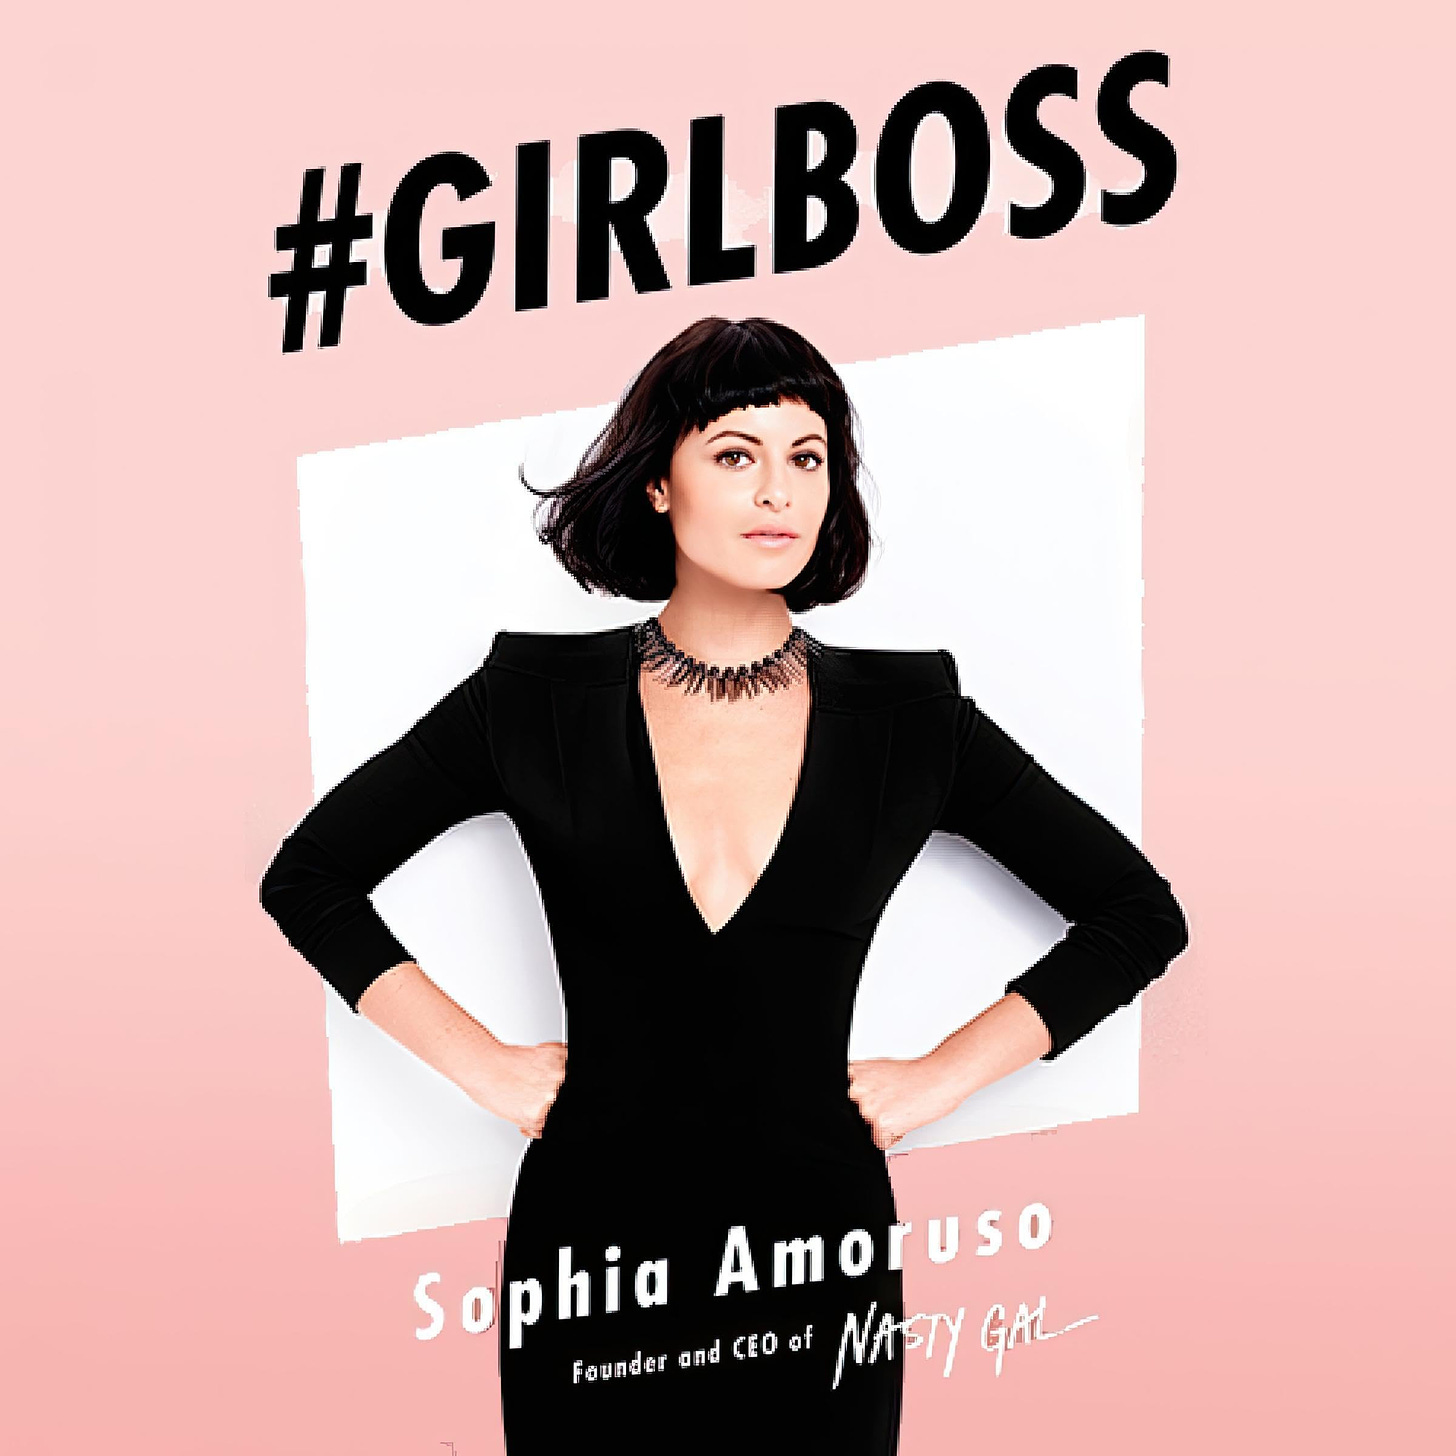 Girlboss by Sophia Amoruso | Goodreads